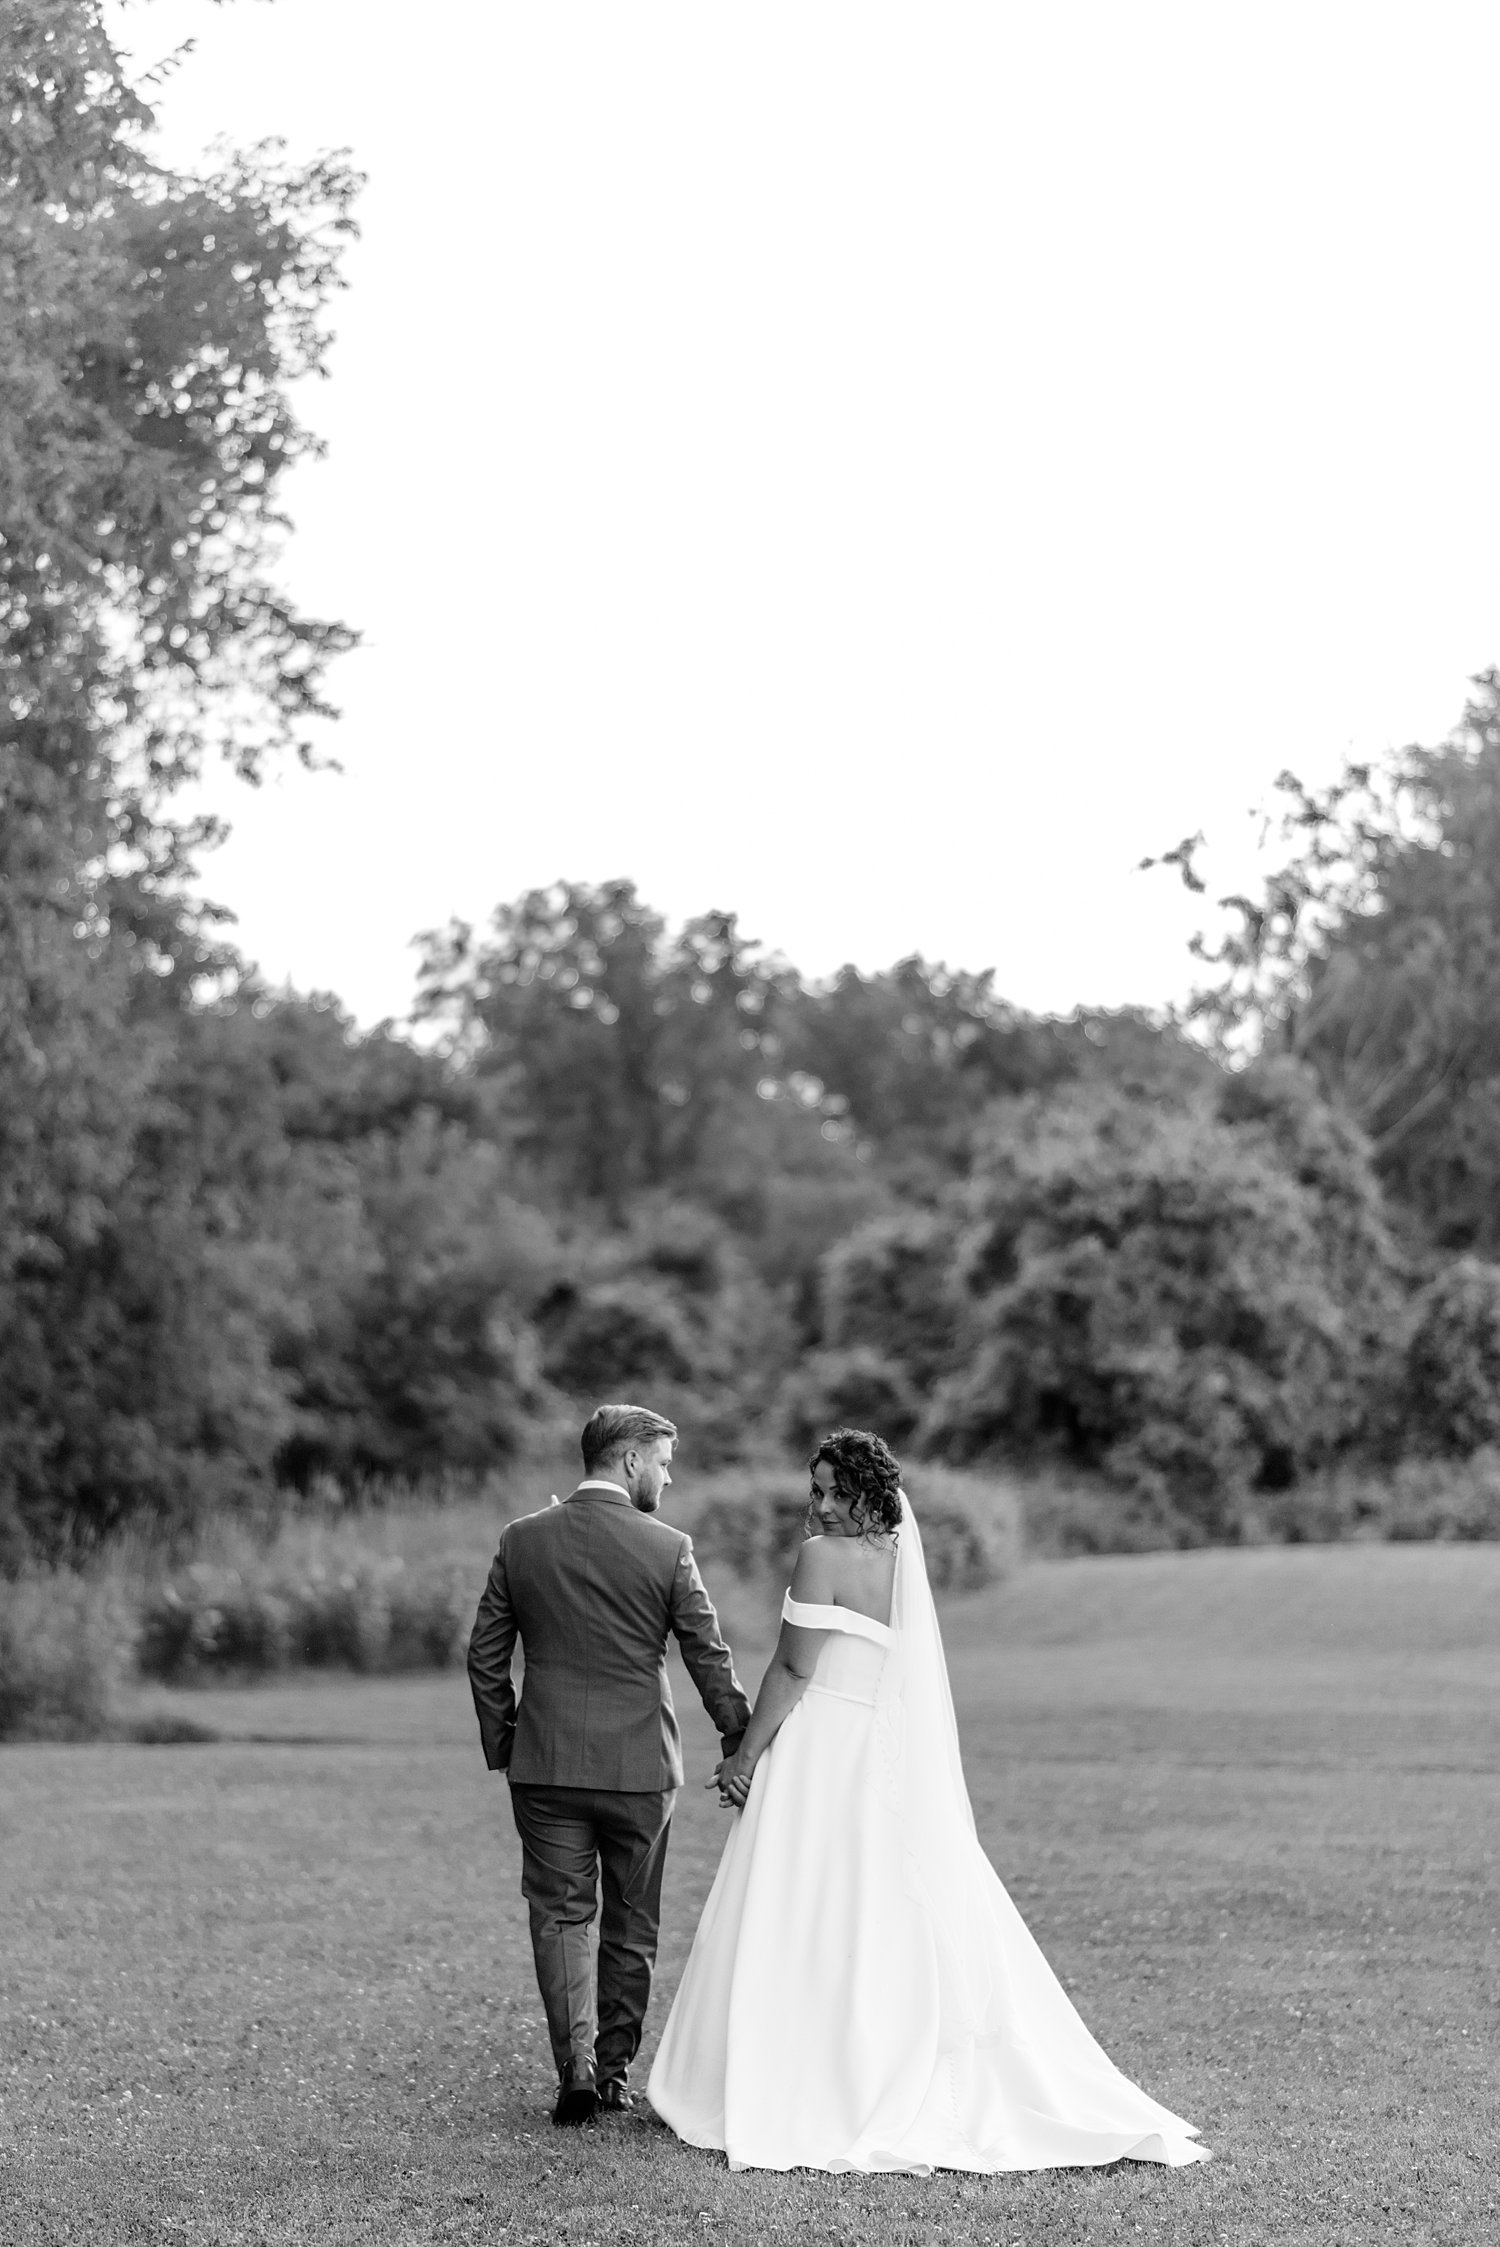 Elegant Summer Backyard Tented Wedding in Sydenham, Ontario | Prince Edward County Wedding Photographer | Holly McMurter Photographs_0103.jpg